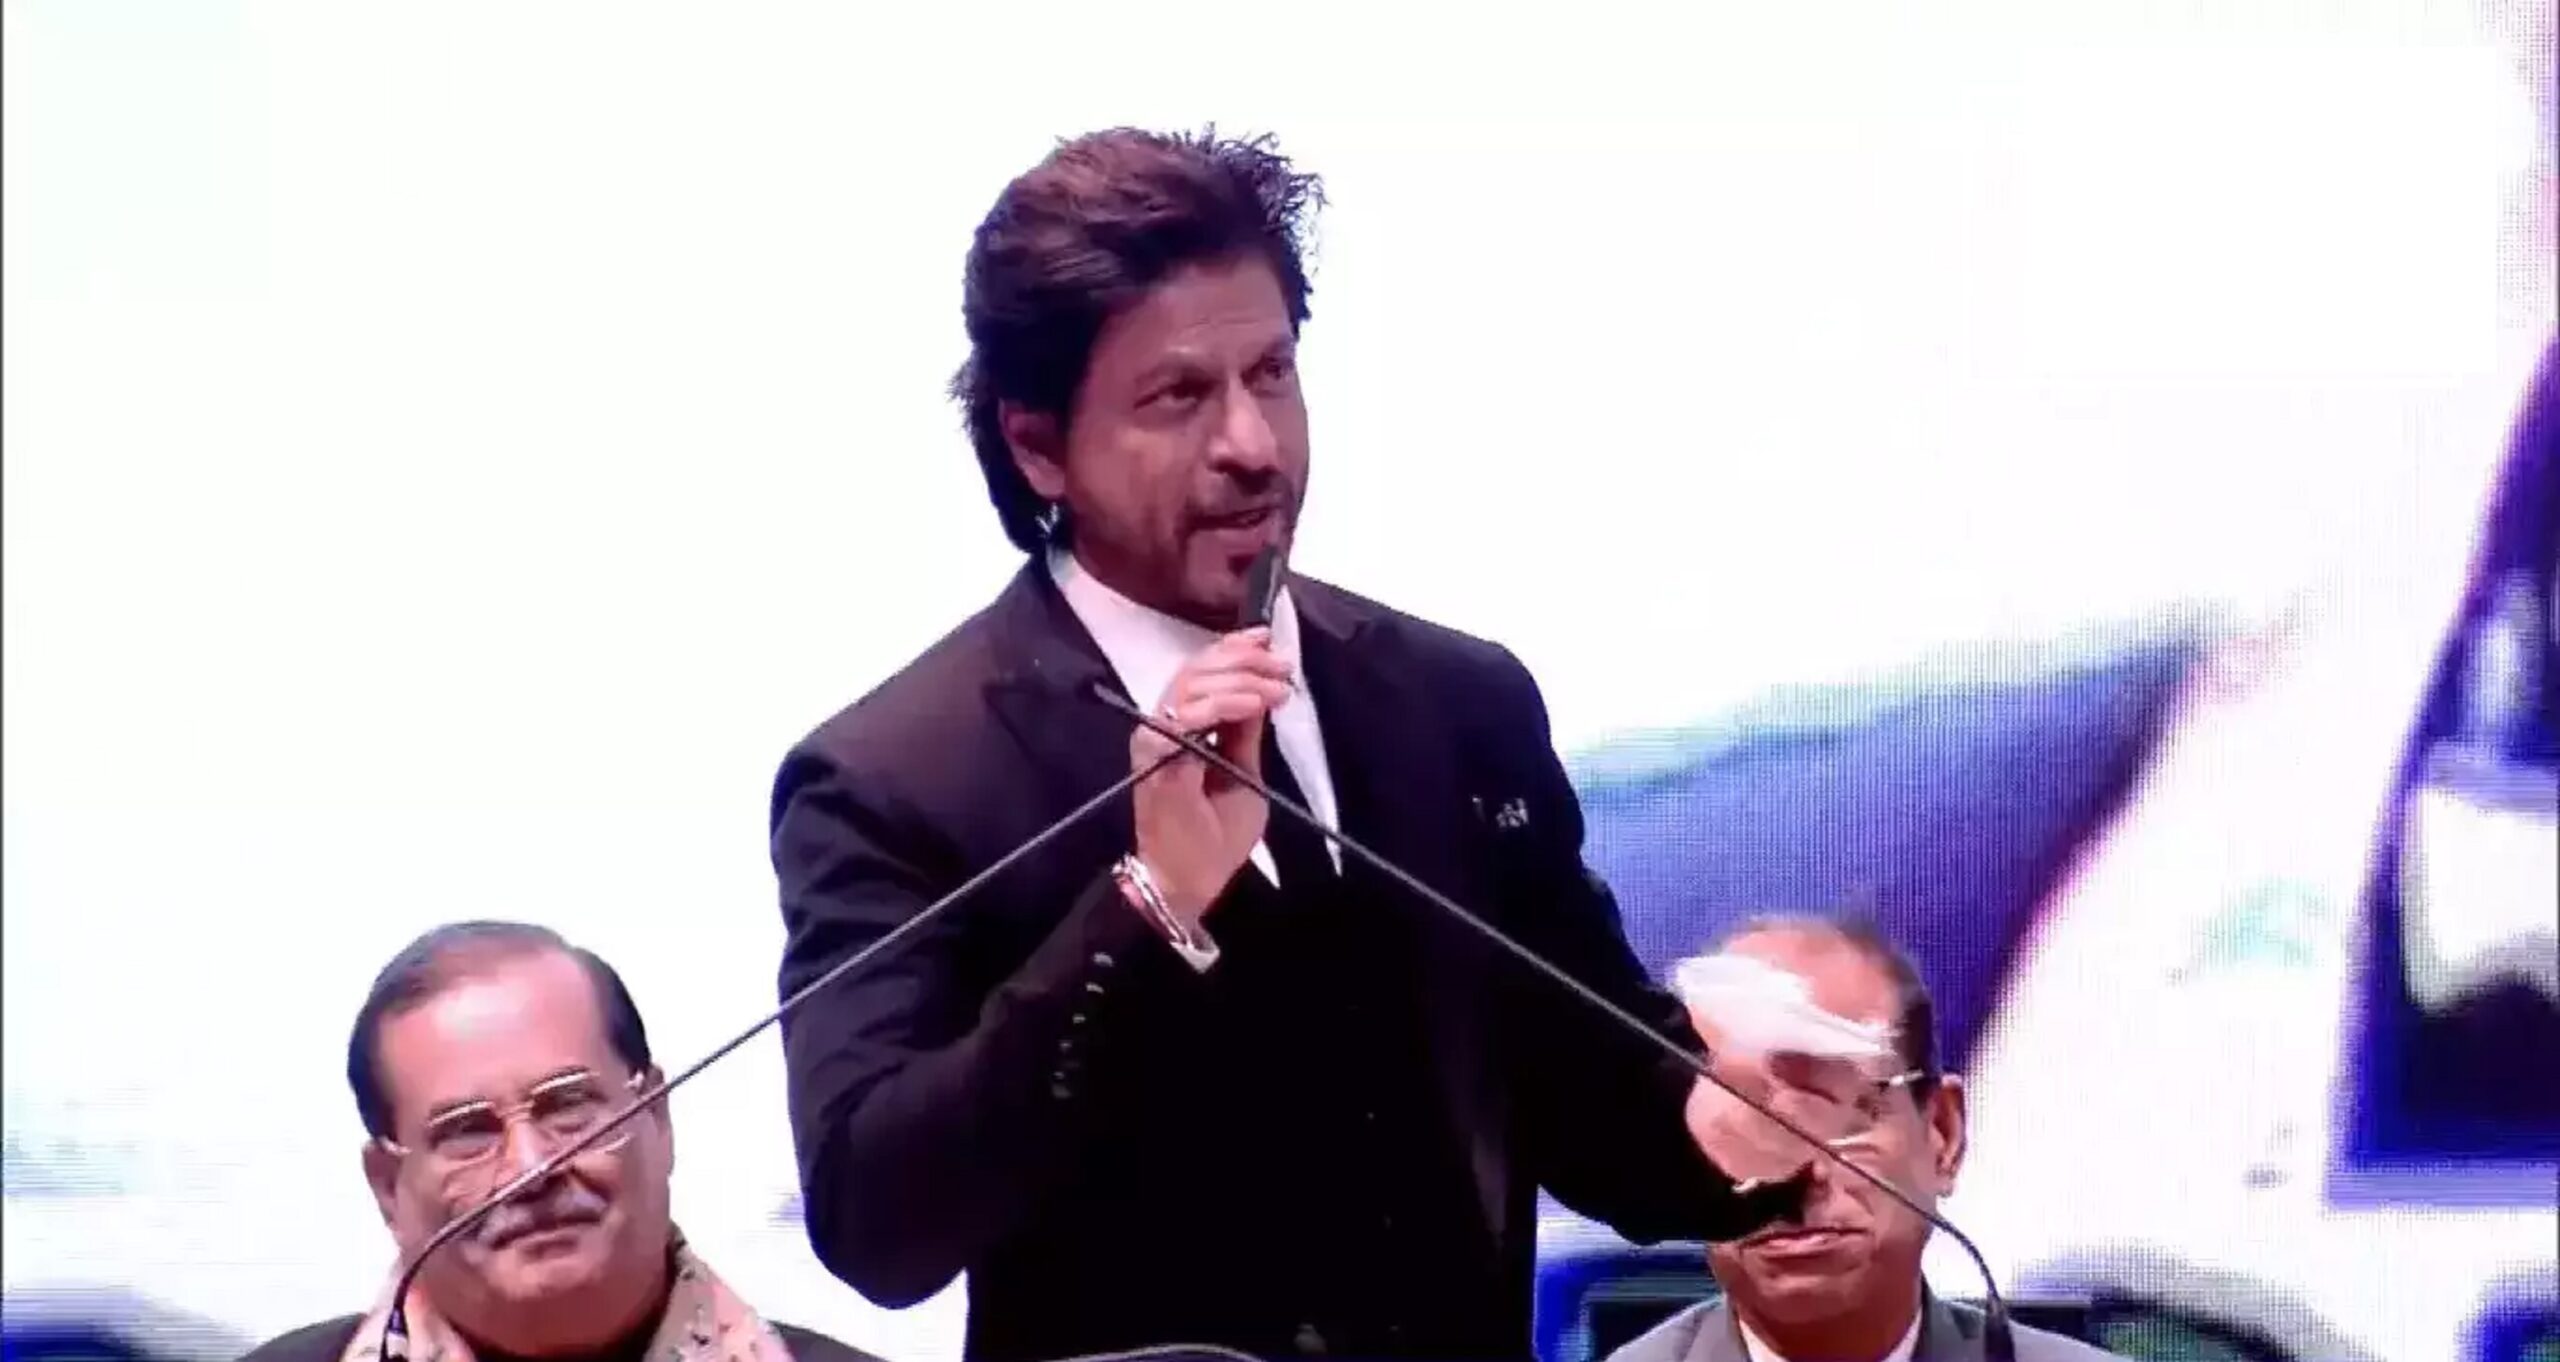 Watch : Shahrukh Khan reacts to the ongoing boycott calls against Pathaan, says ‘Duniya Chahe Kuch Bhi Karle….’